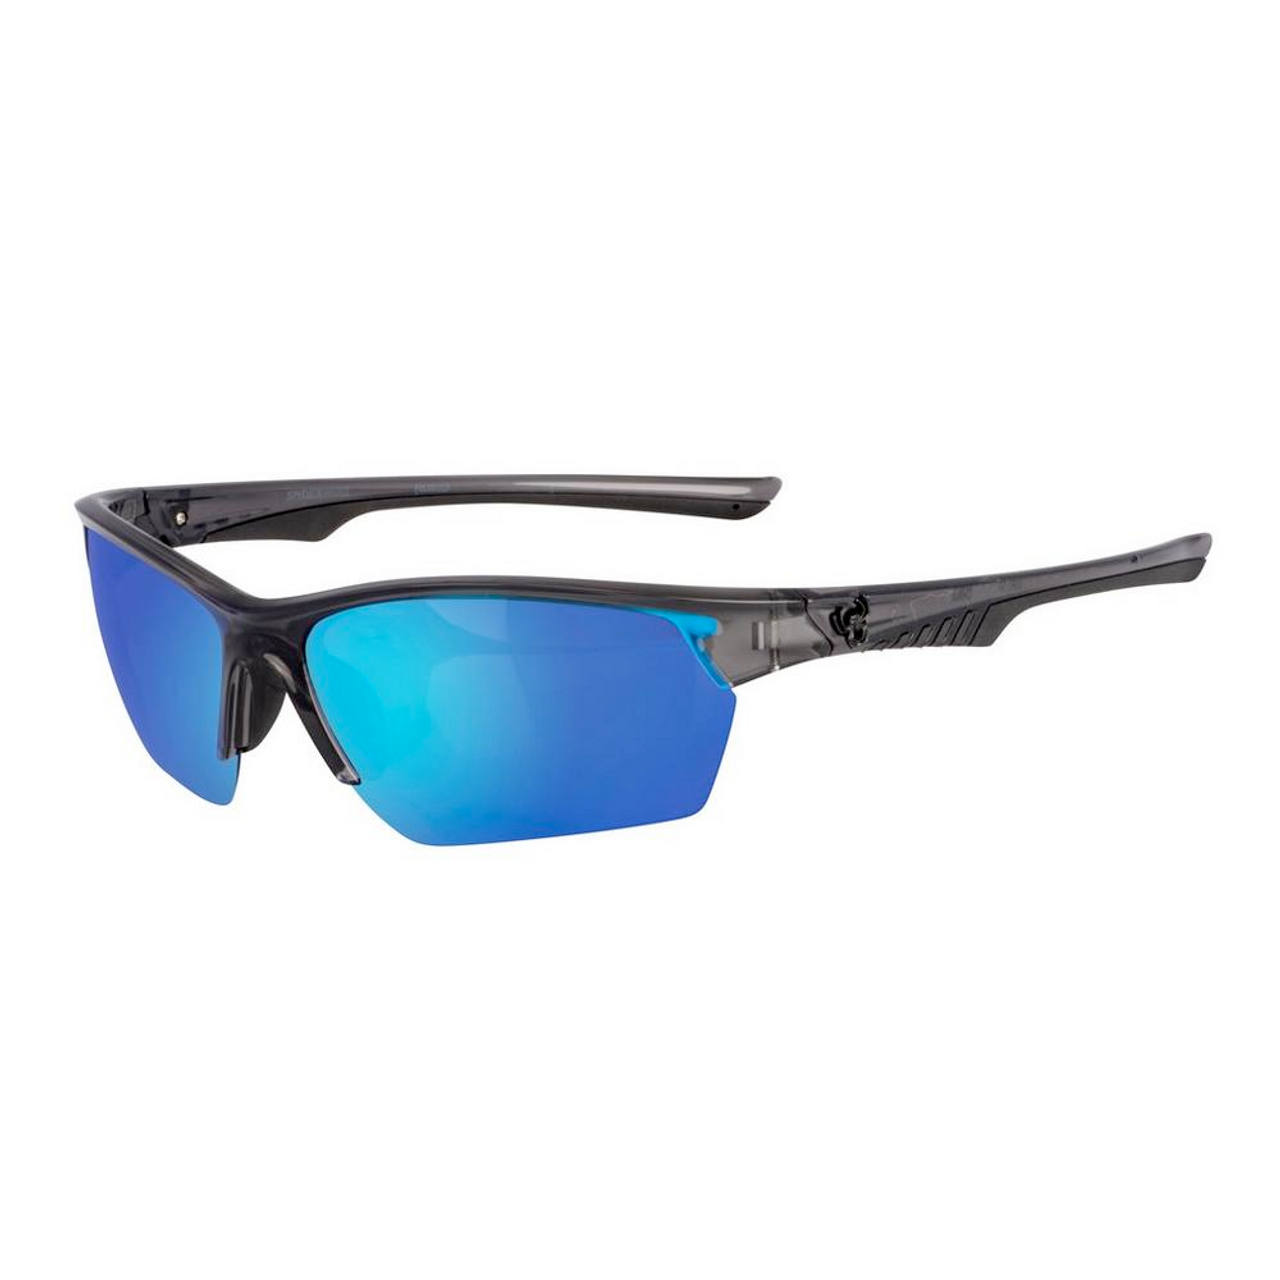 Spiderwire SPW009 Sunglasses, Matte Grey Frame/ Blue Mirror (Grey Base) Lens, M/L